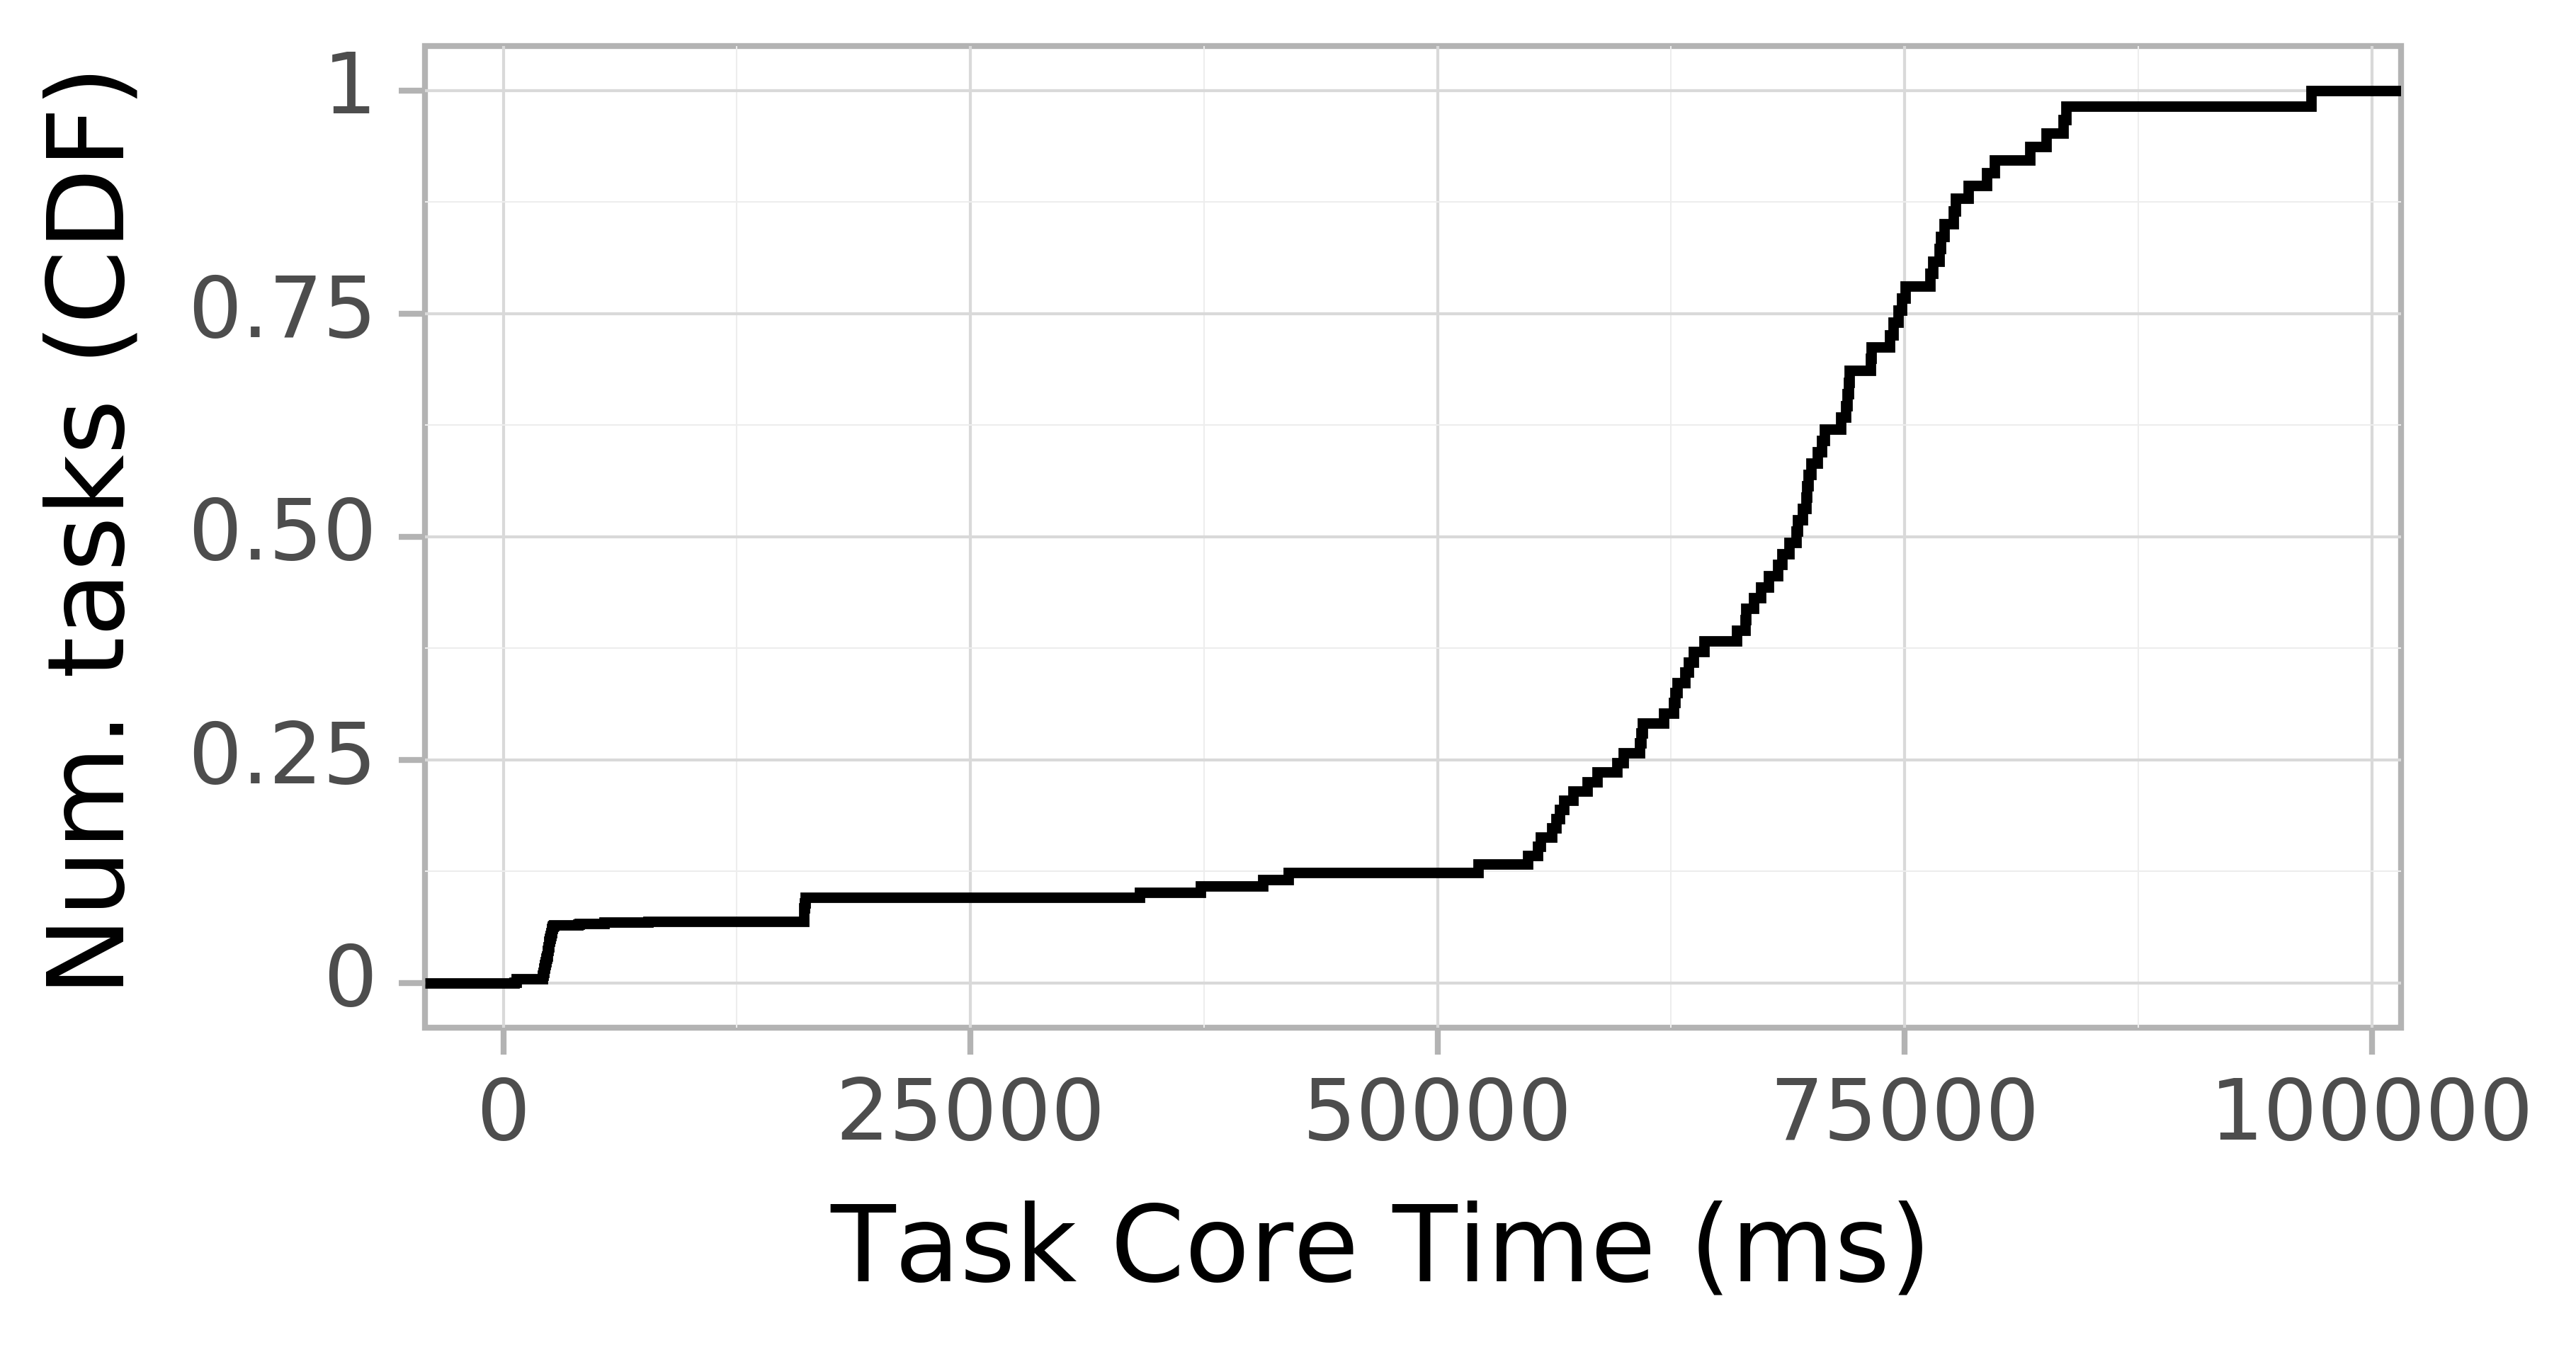 task resource time CDF graph for the workflowhub_epigenomics_dataset-taq_chameleon-cloud_schema-0-2_epigenomics-taq-100000-cc-run002 trace.